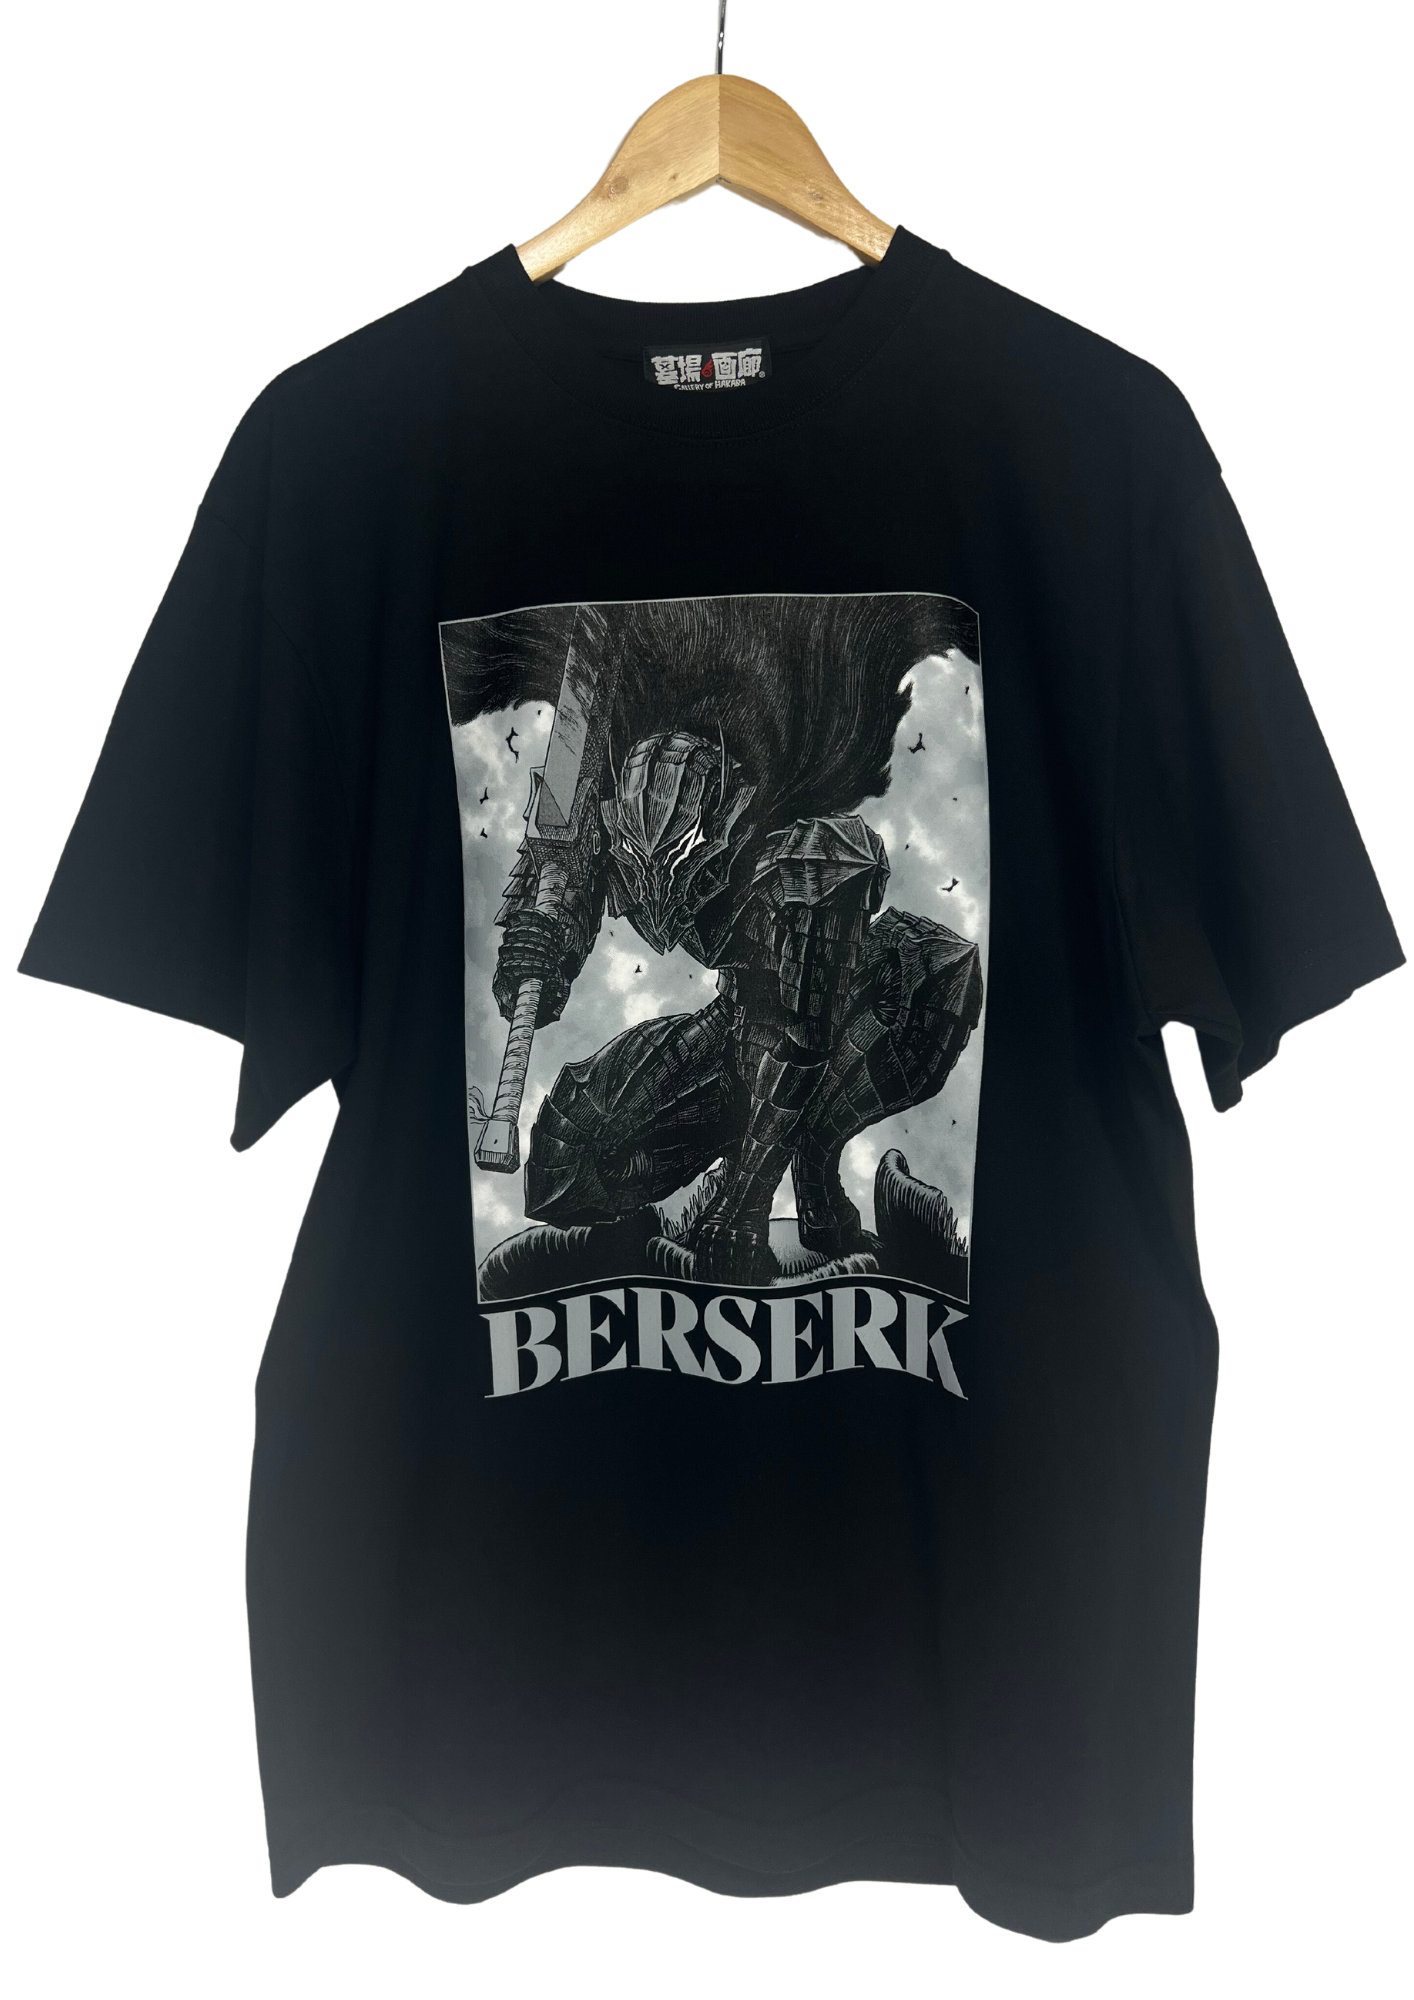 Berserk x Hakabagarou Exhibition Limited Guts Insane Warrior T-shirt